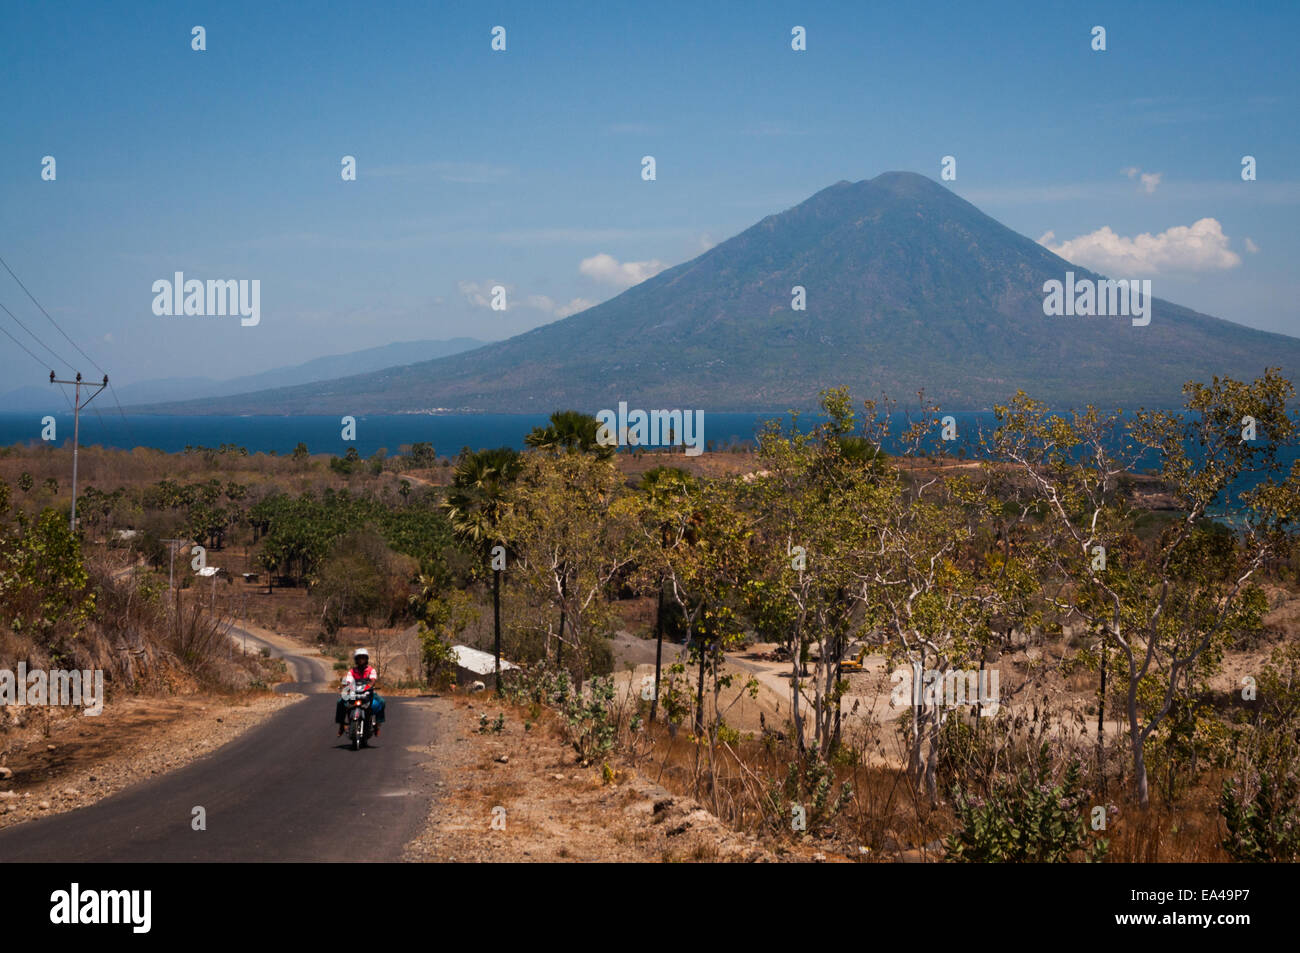 Ile (Mount) Boleng in Adonara Island and Boleng Strait are seen from a road near Waijarang hill in Lembata Island, East Nusa Tenggara, Indonesia. Stock Photo